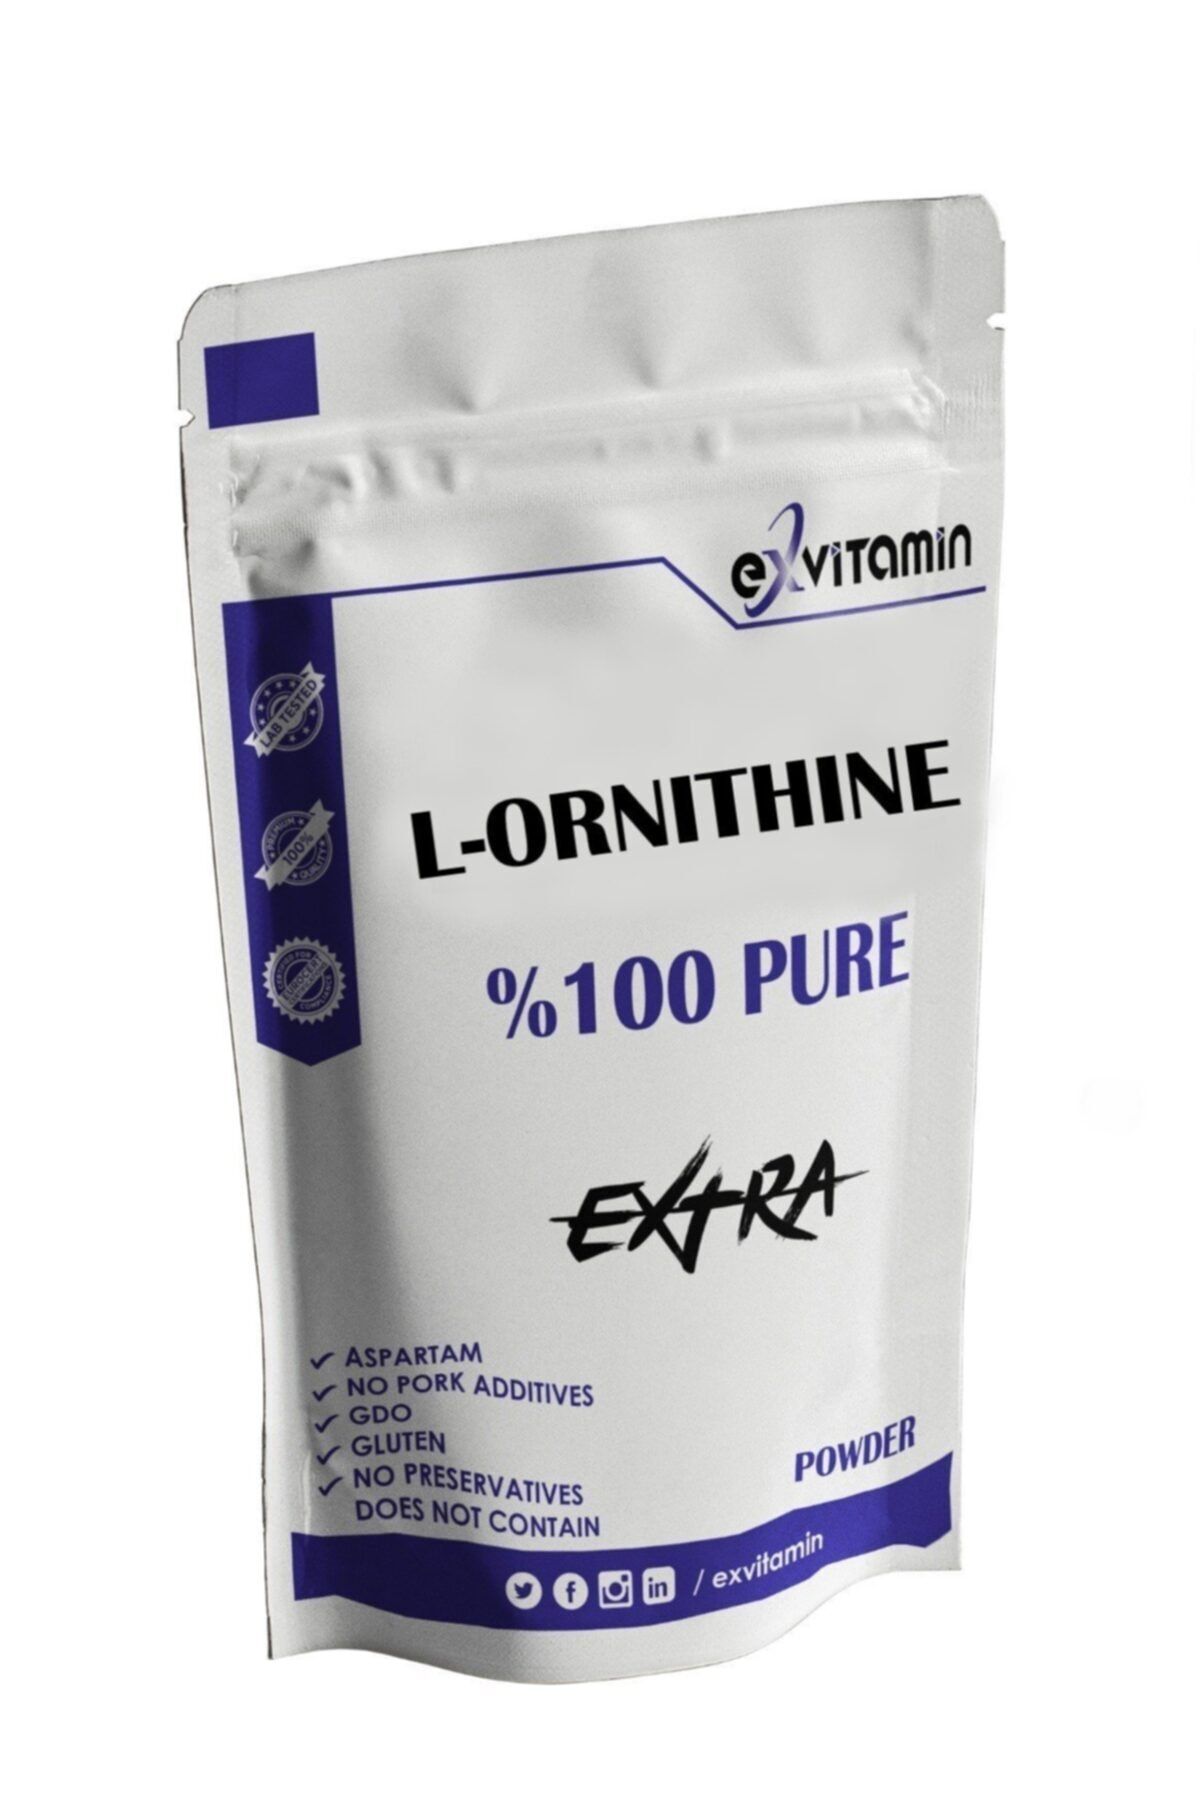 exvitamin Ornitin L 0rnithine Saf Katkısız 100 gr